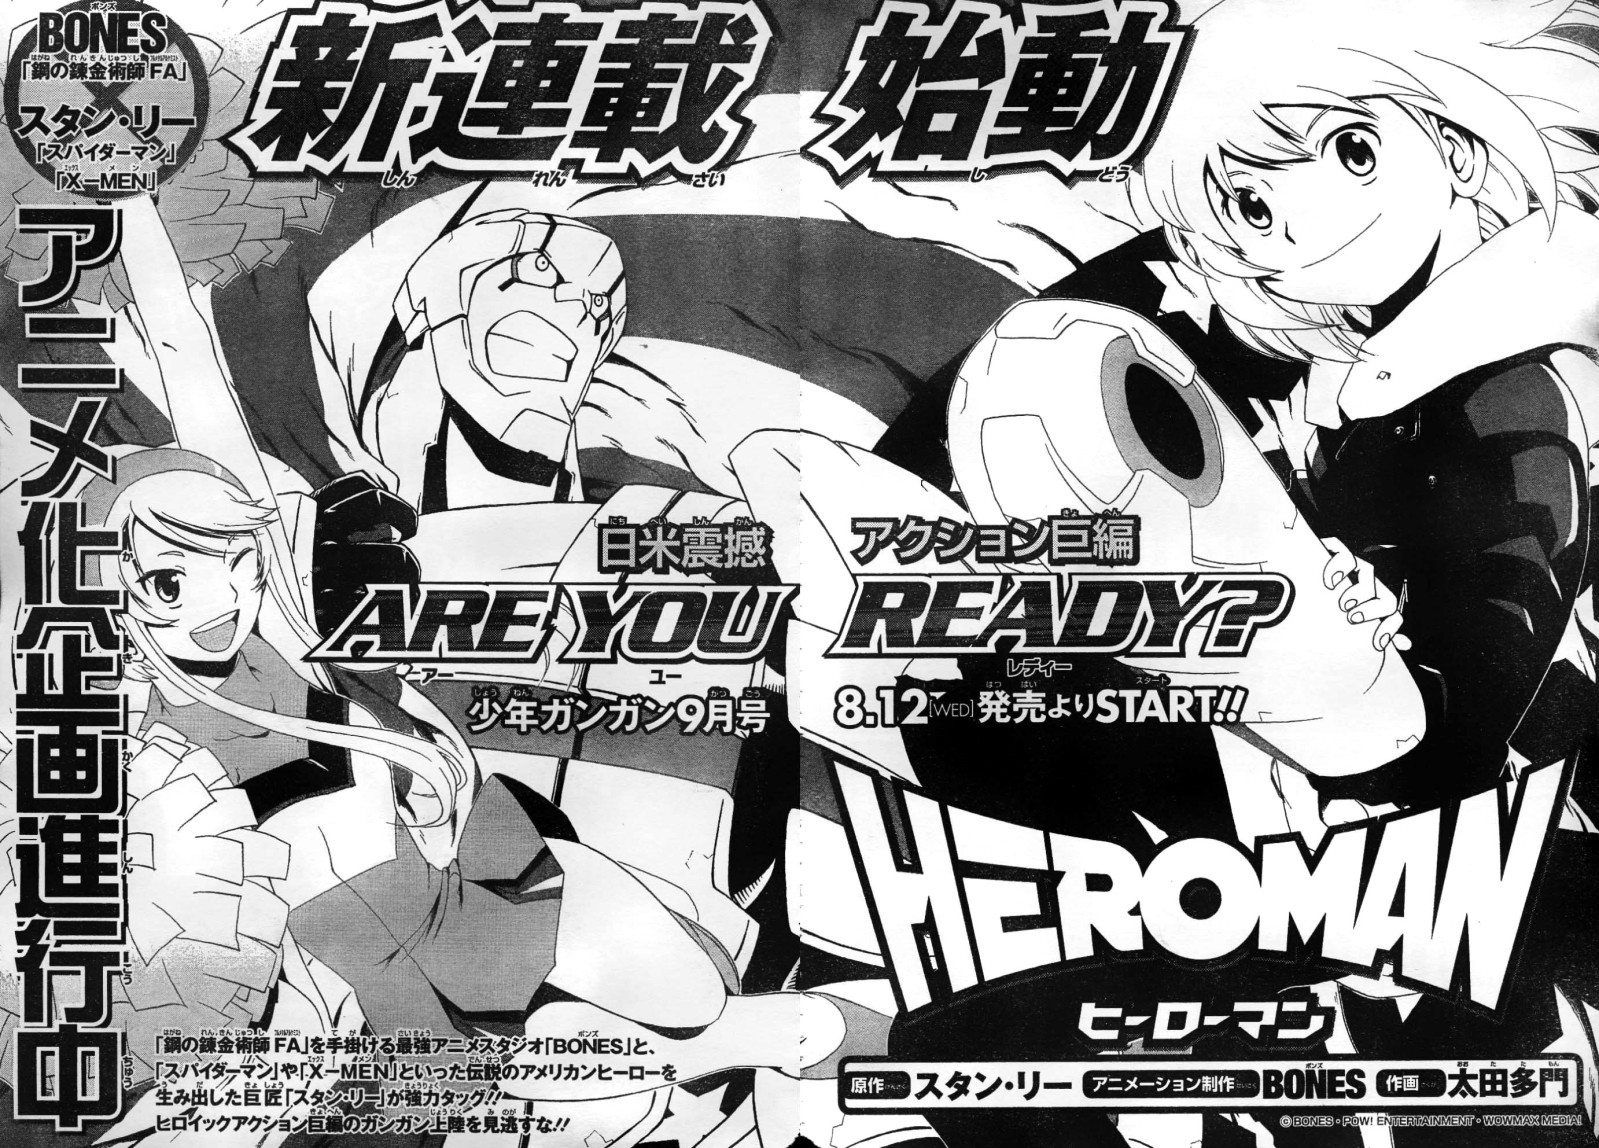 Tokyo Anime Fair: Heroman